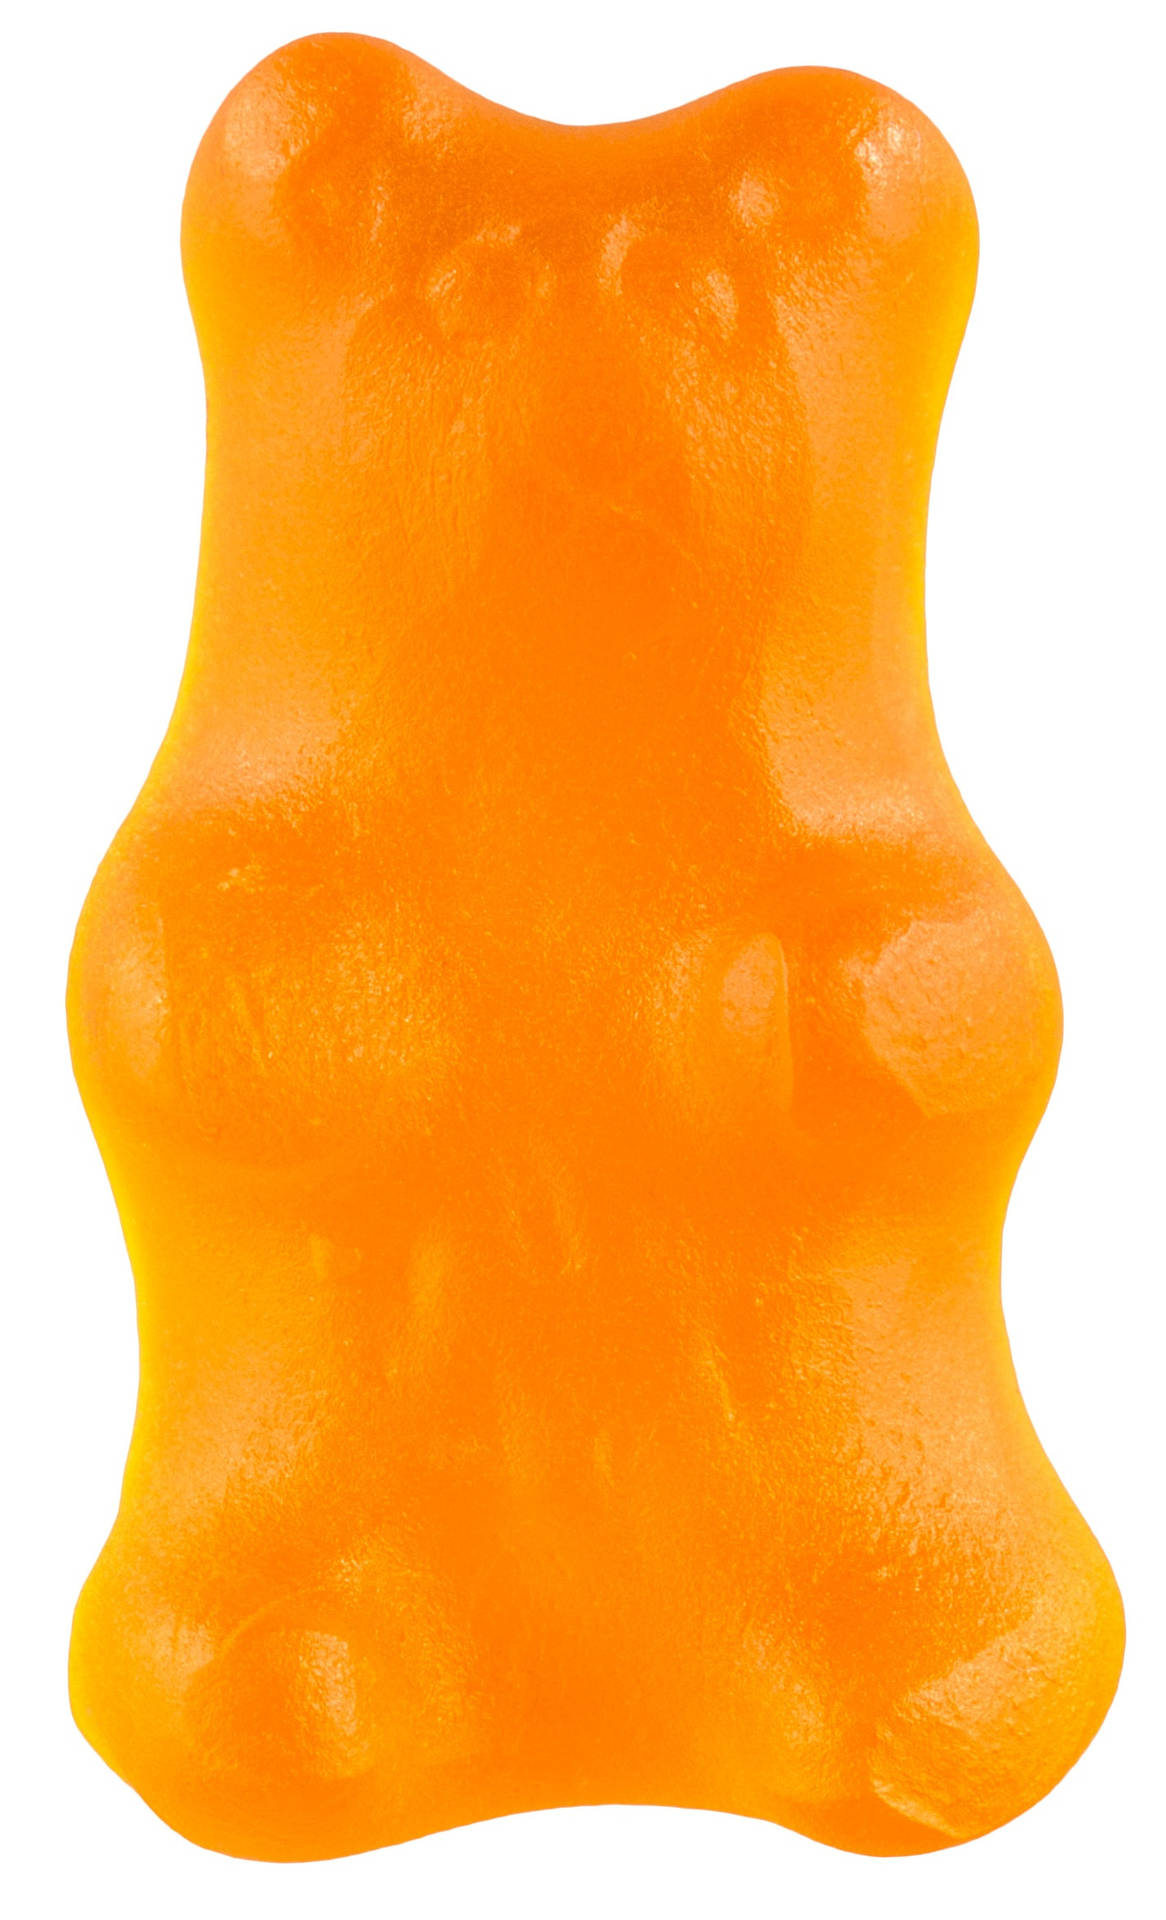 Orange Chewy Gummy Bear Wallpaper